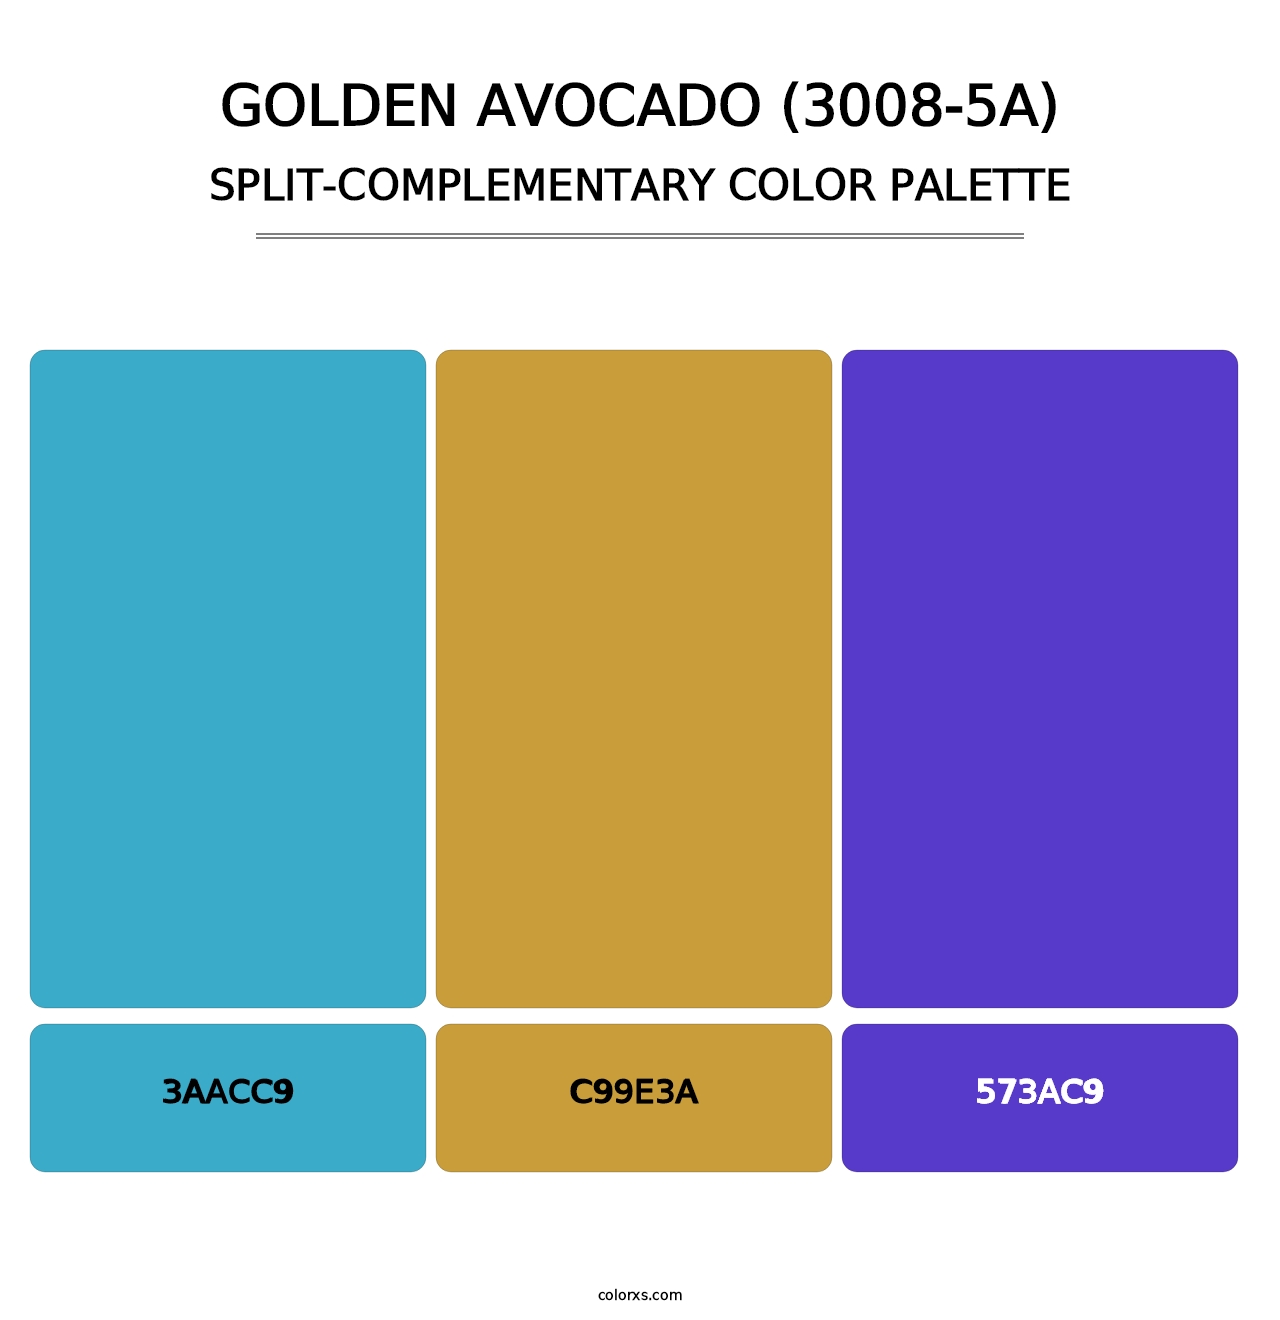 Golden Avocado (3008-5A) - Split-Complementary Color Palette